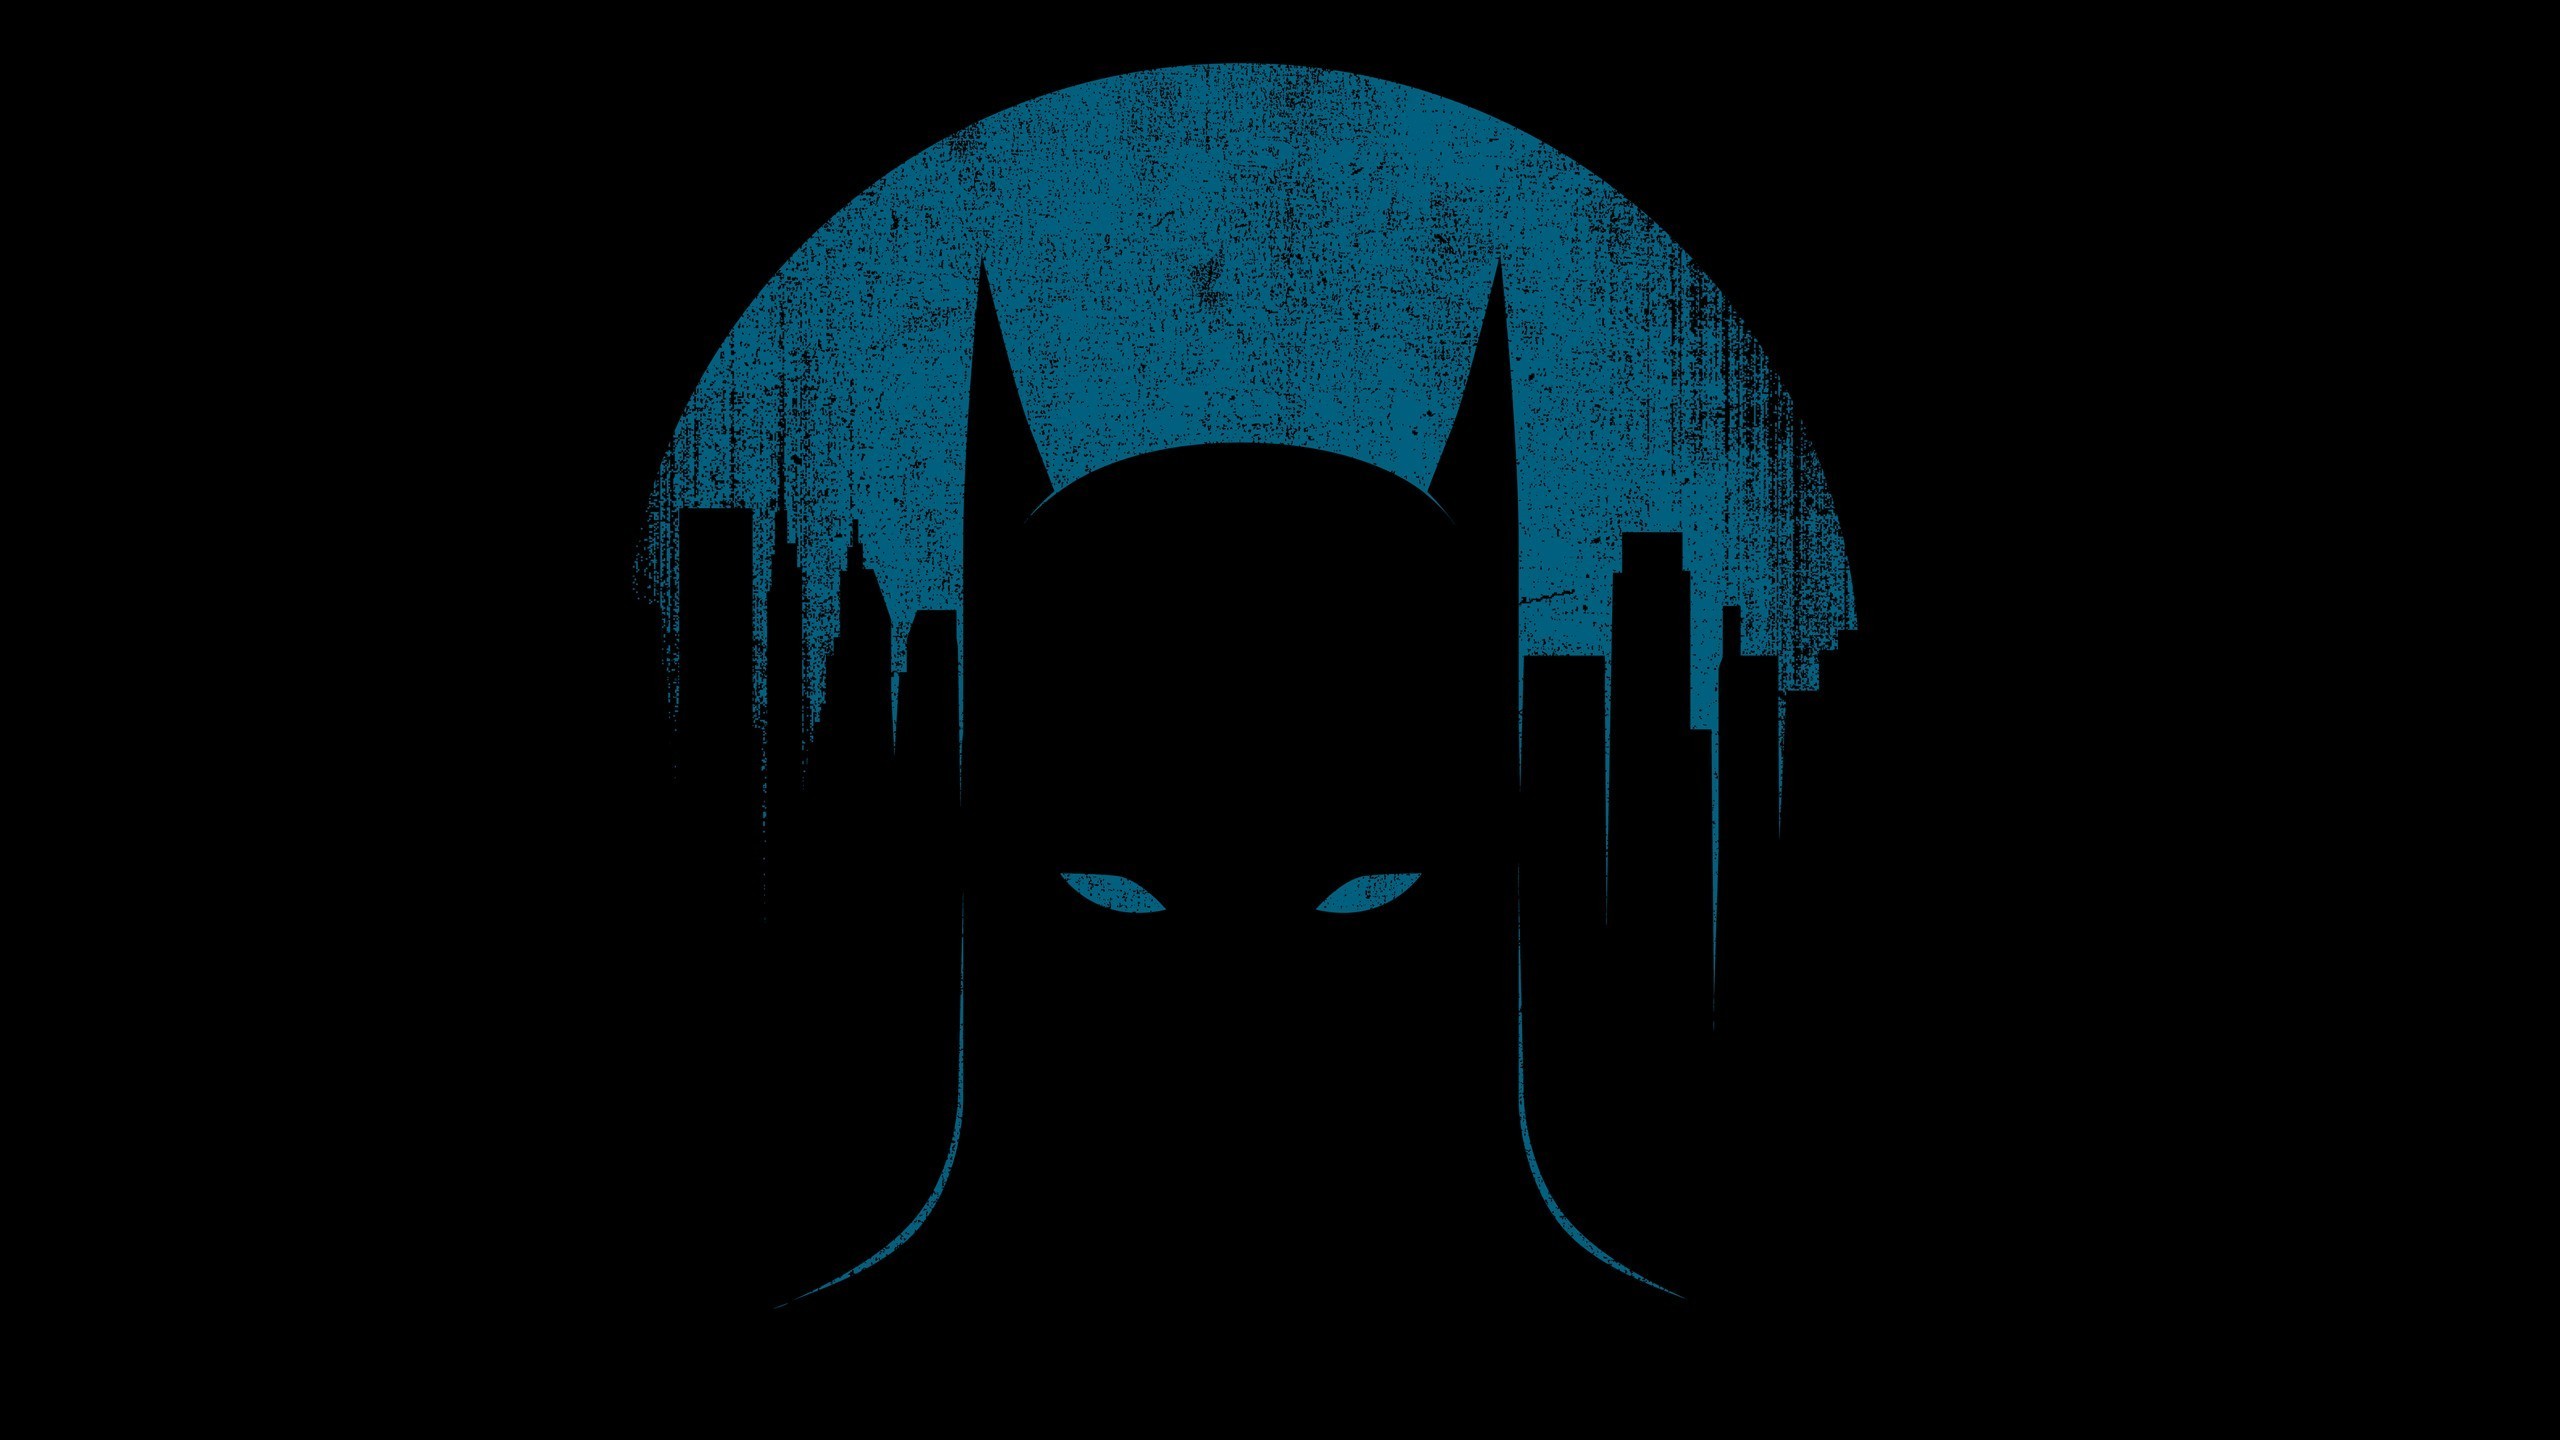 General 2560x1440 Batman artwork minimalism superhero black background comic art